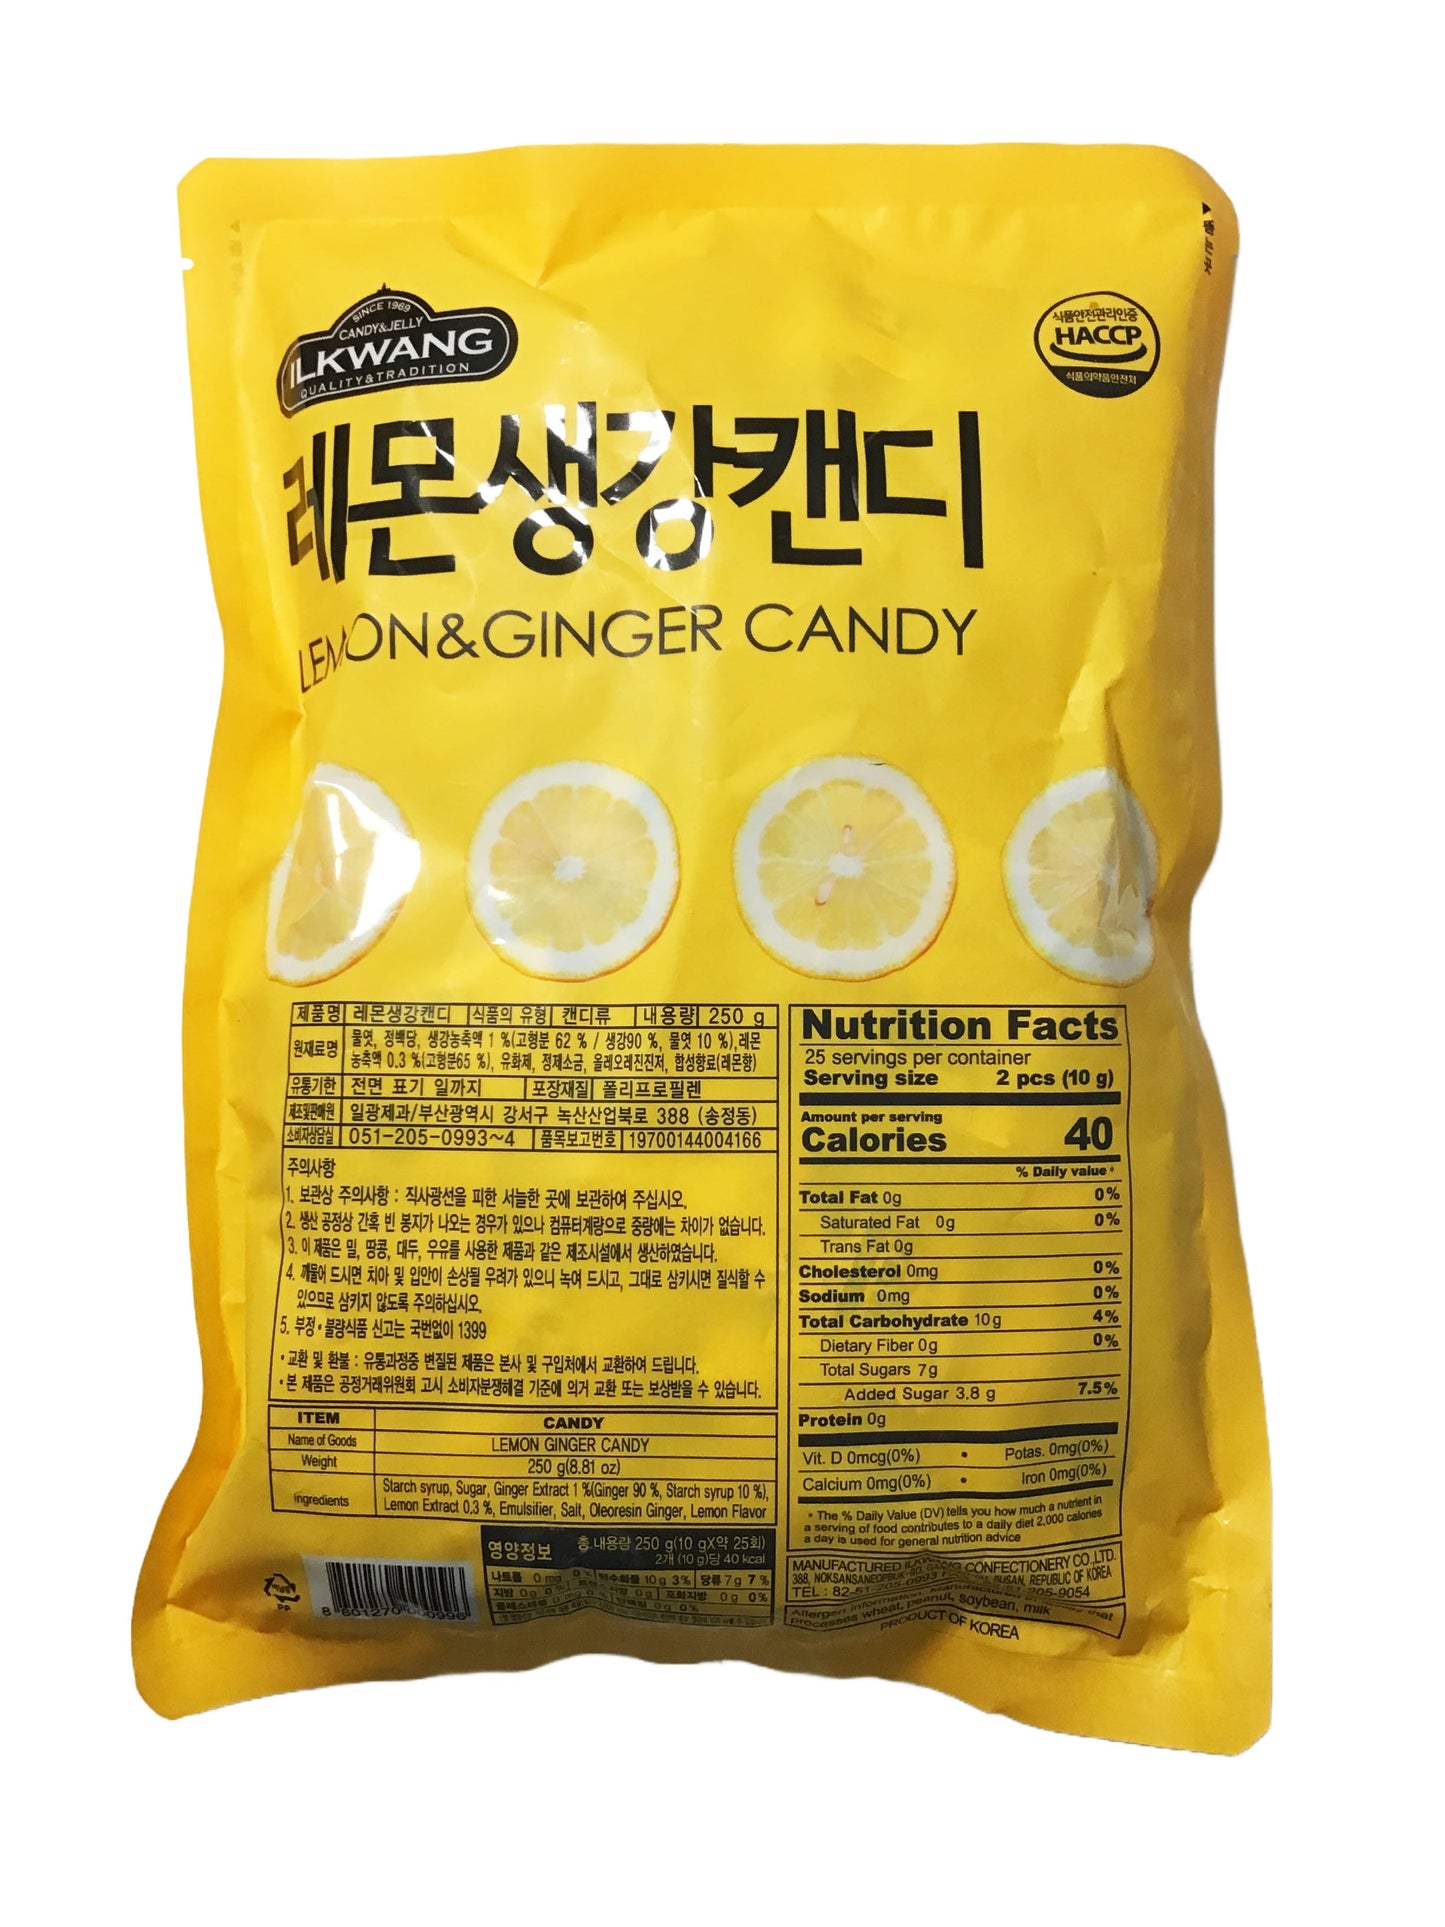 ILKWANG Lemon and Ginger Candy 檸檬薑糖 8.81oz (250g)